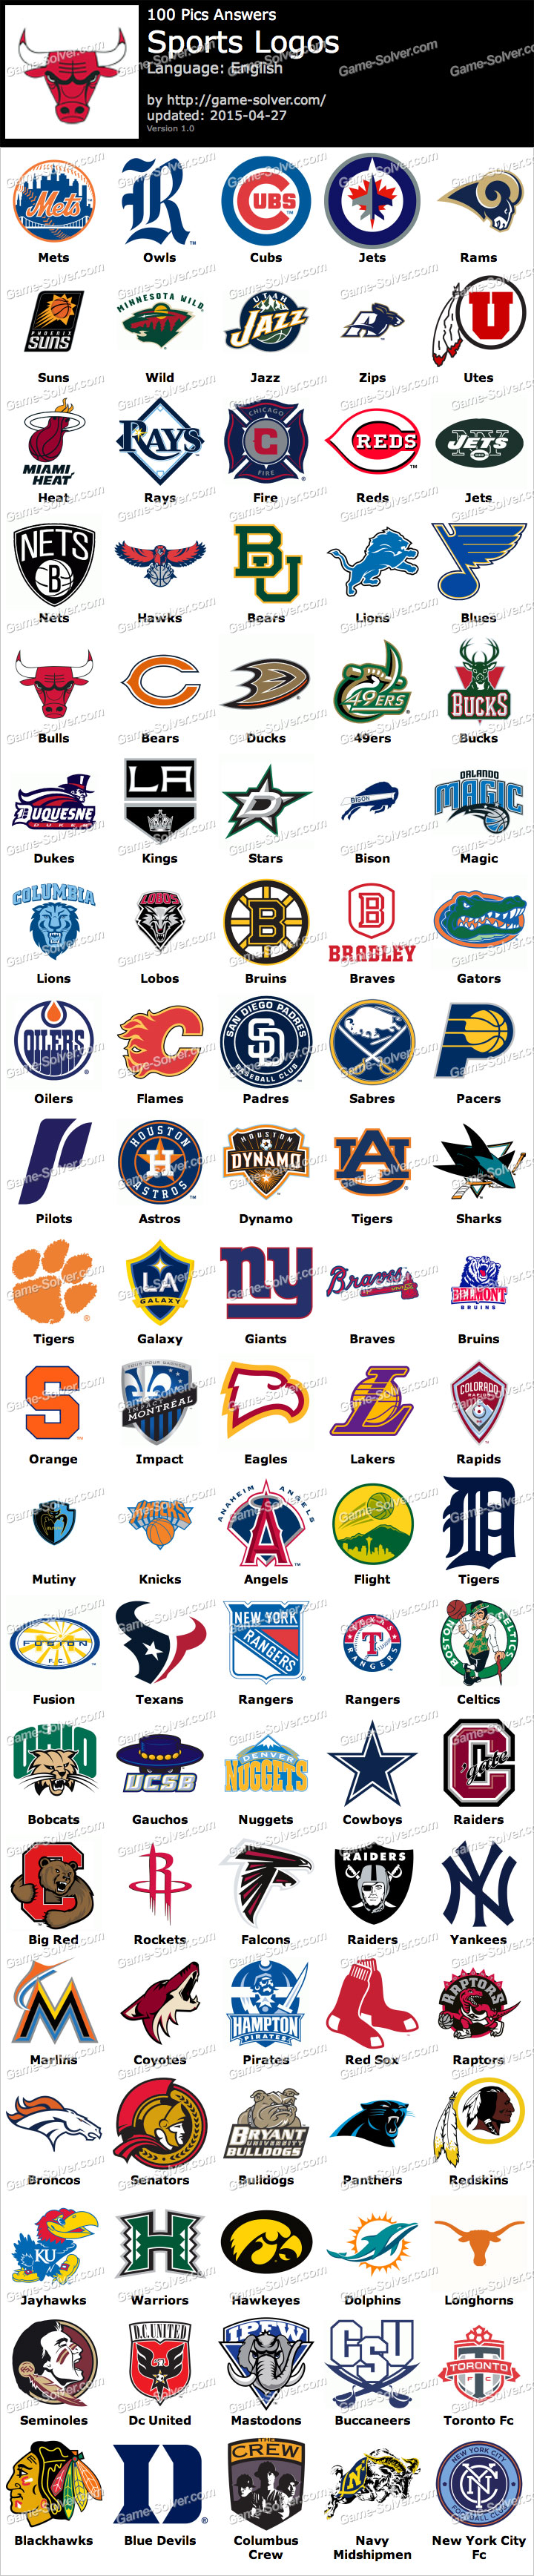 100 Pics Sports Logos 2 - Game Solver